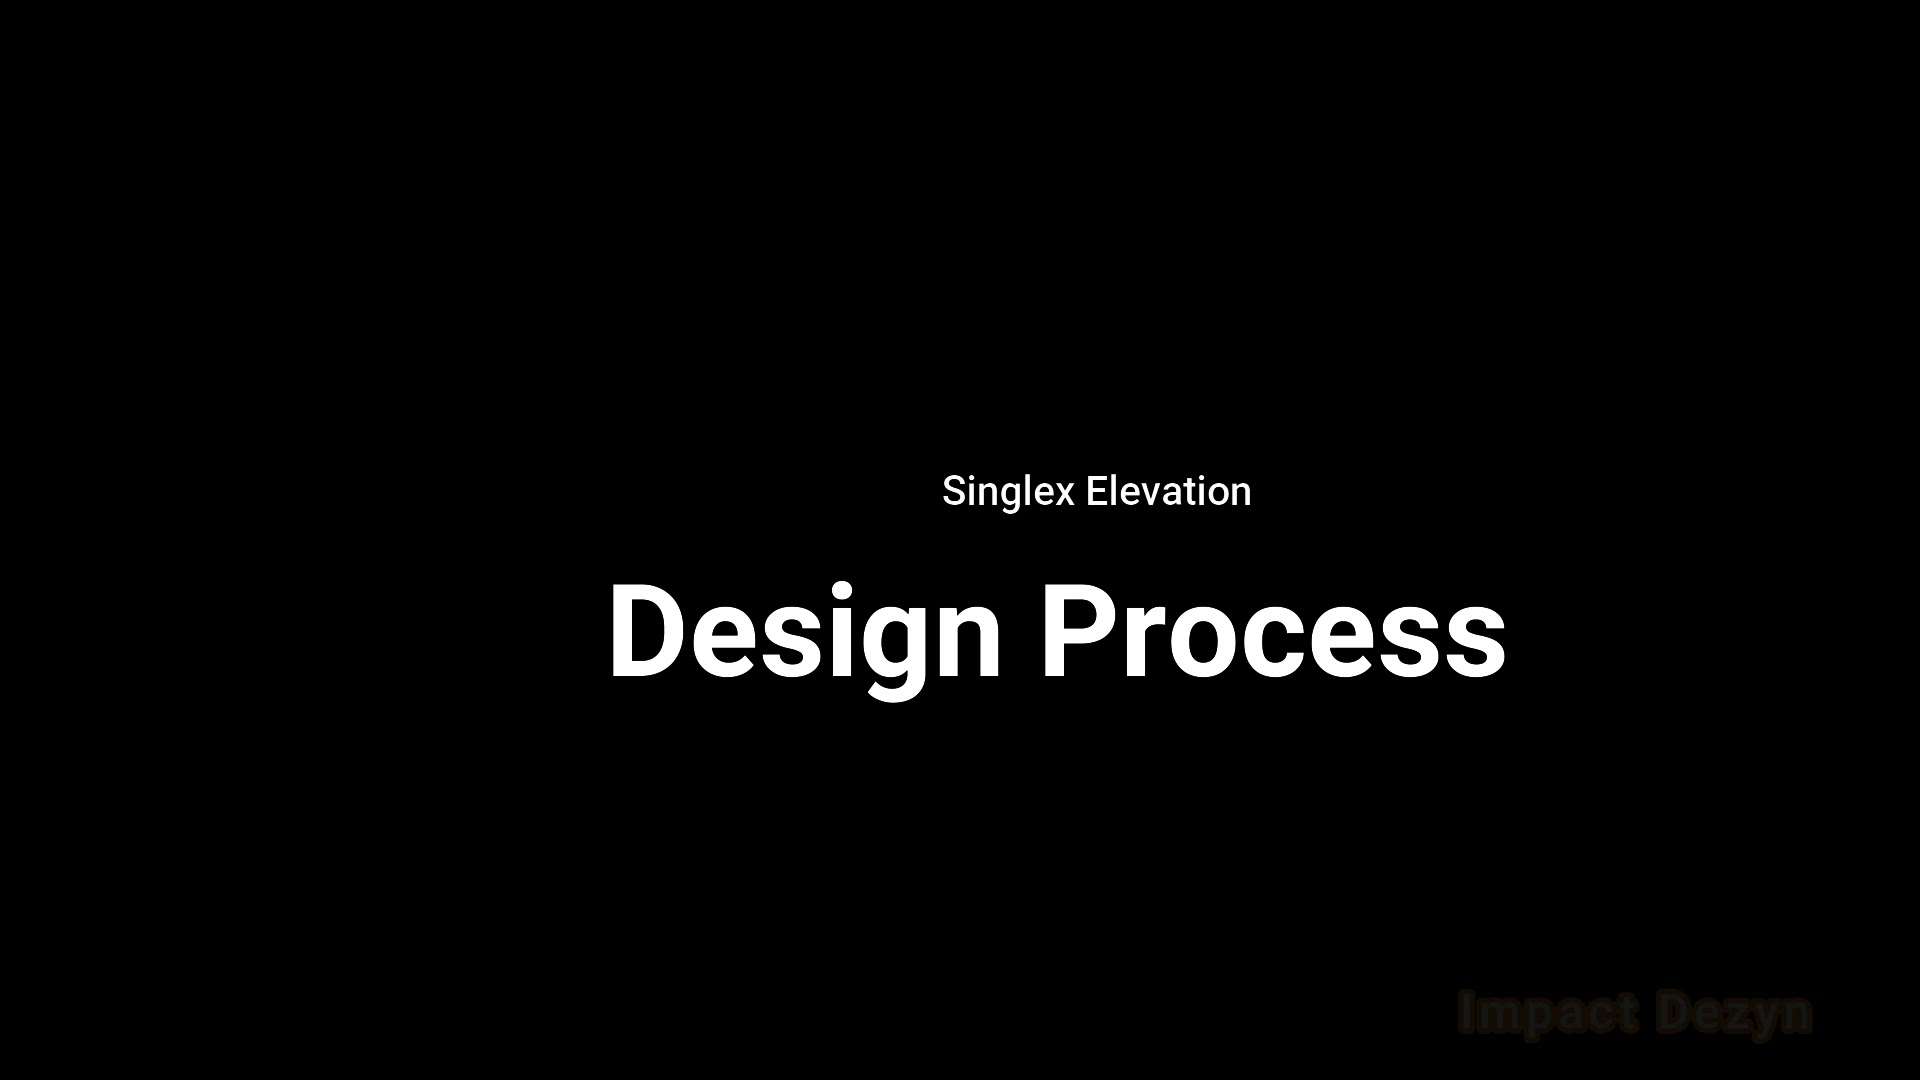 #singlex #ElevationDesign  #moderndesign #bestdesign